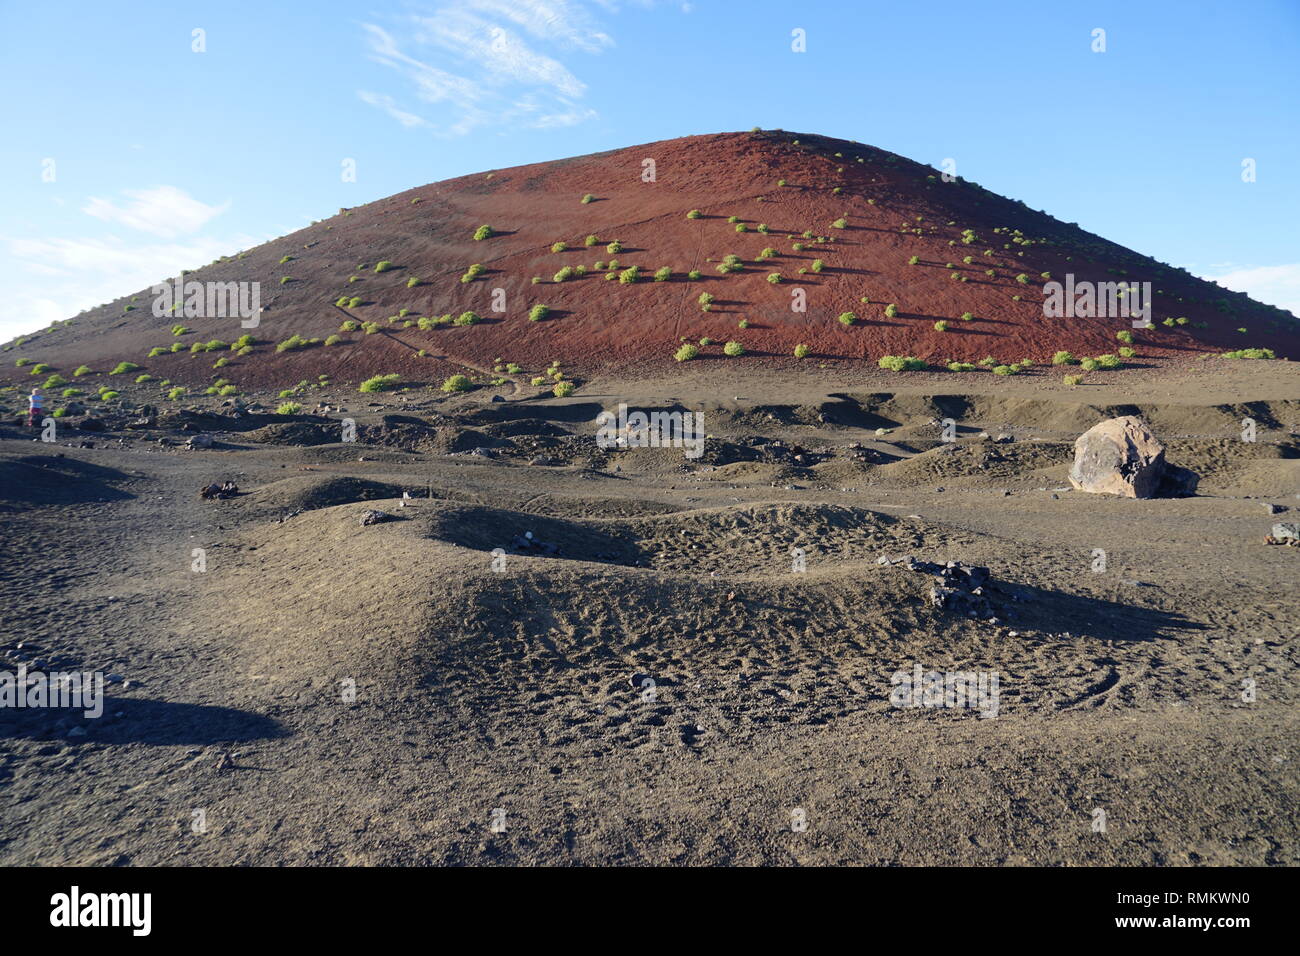 Montana Colorada, Lanzarote, Kanarische Inseln, Spanien Stock Photo - Alamy